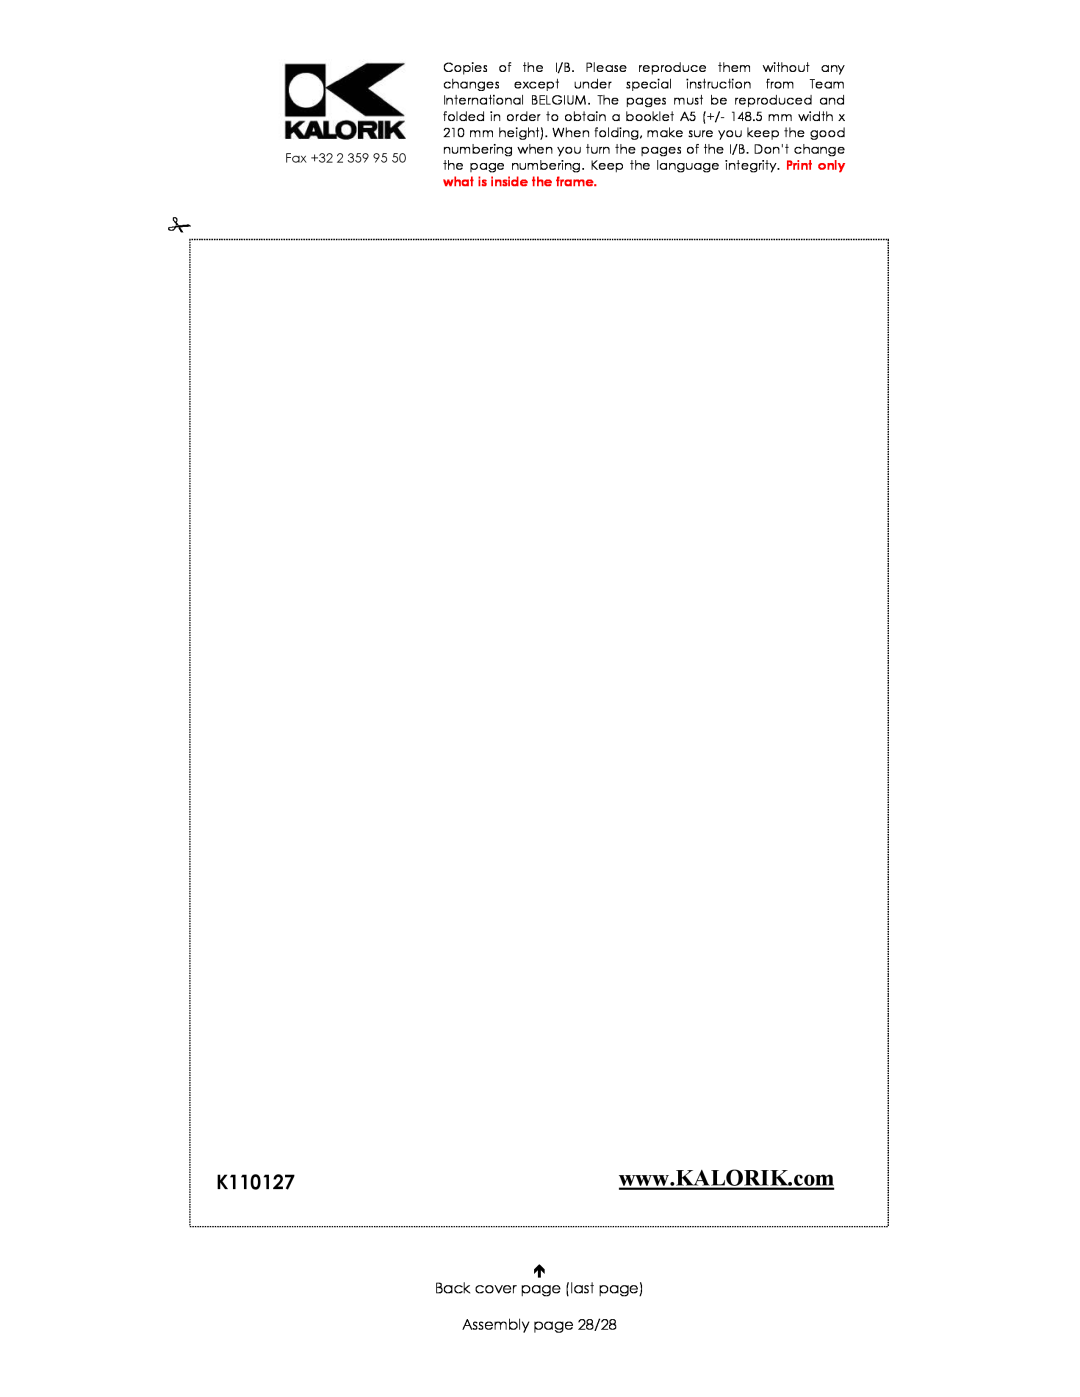 Kalorik USK M 21847 manual Back cover page last page Assembly page 28/28 